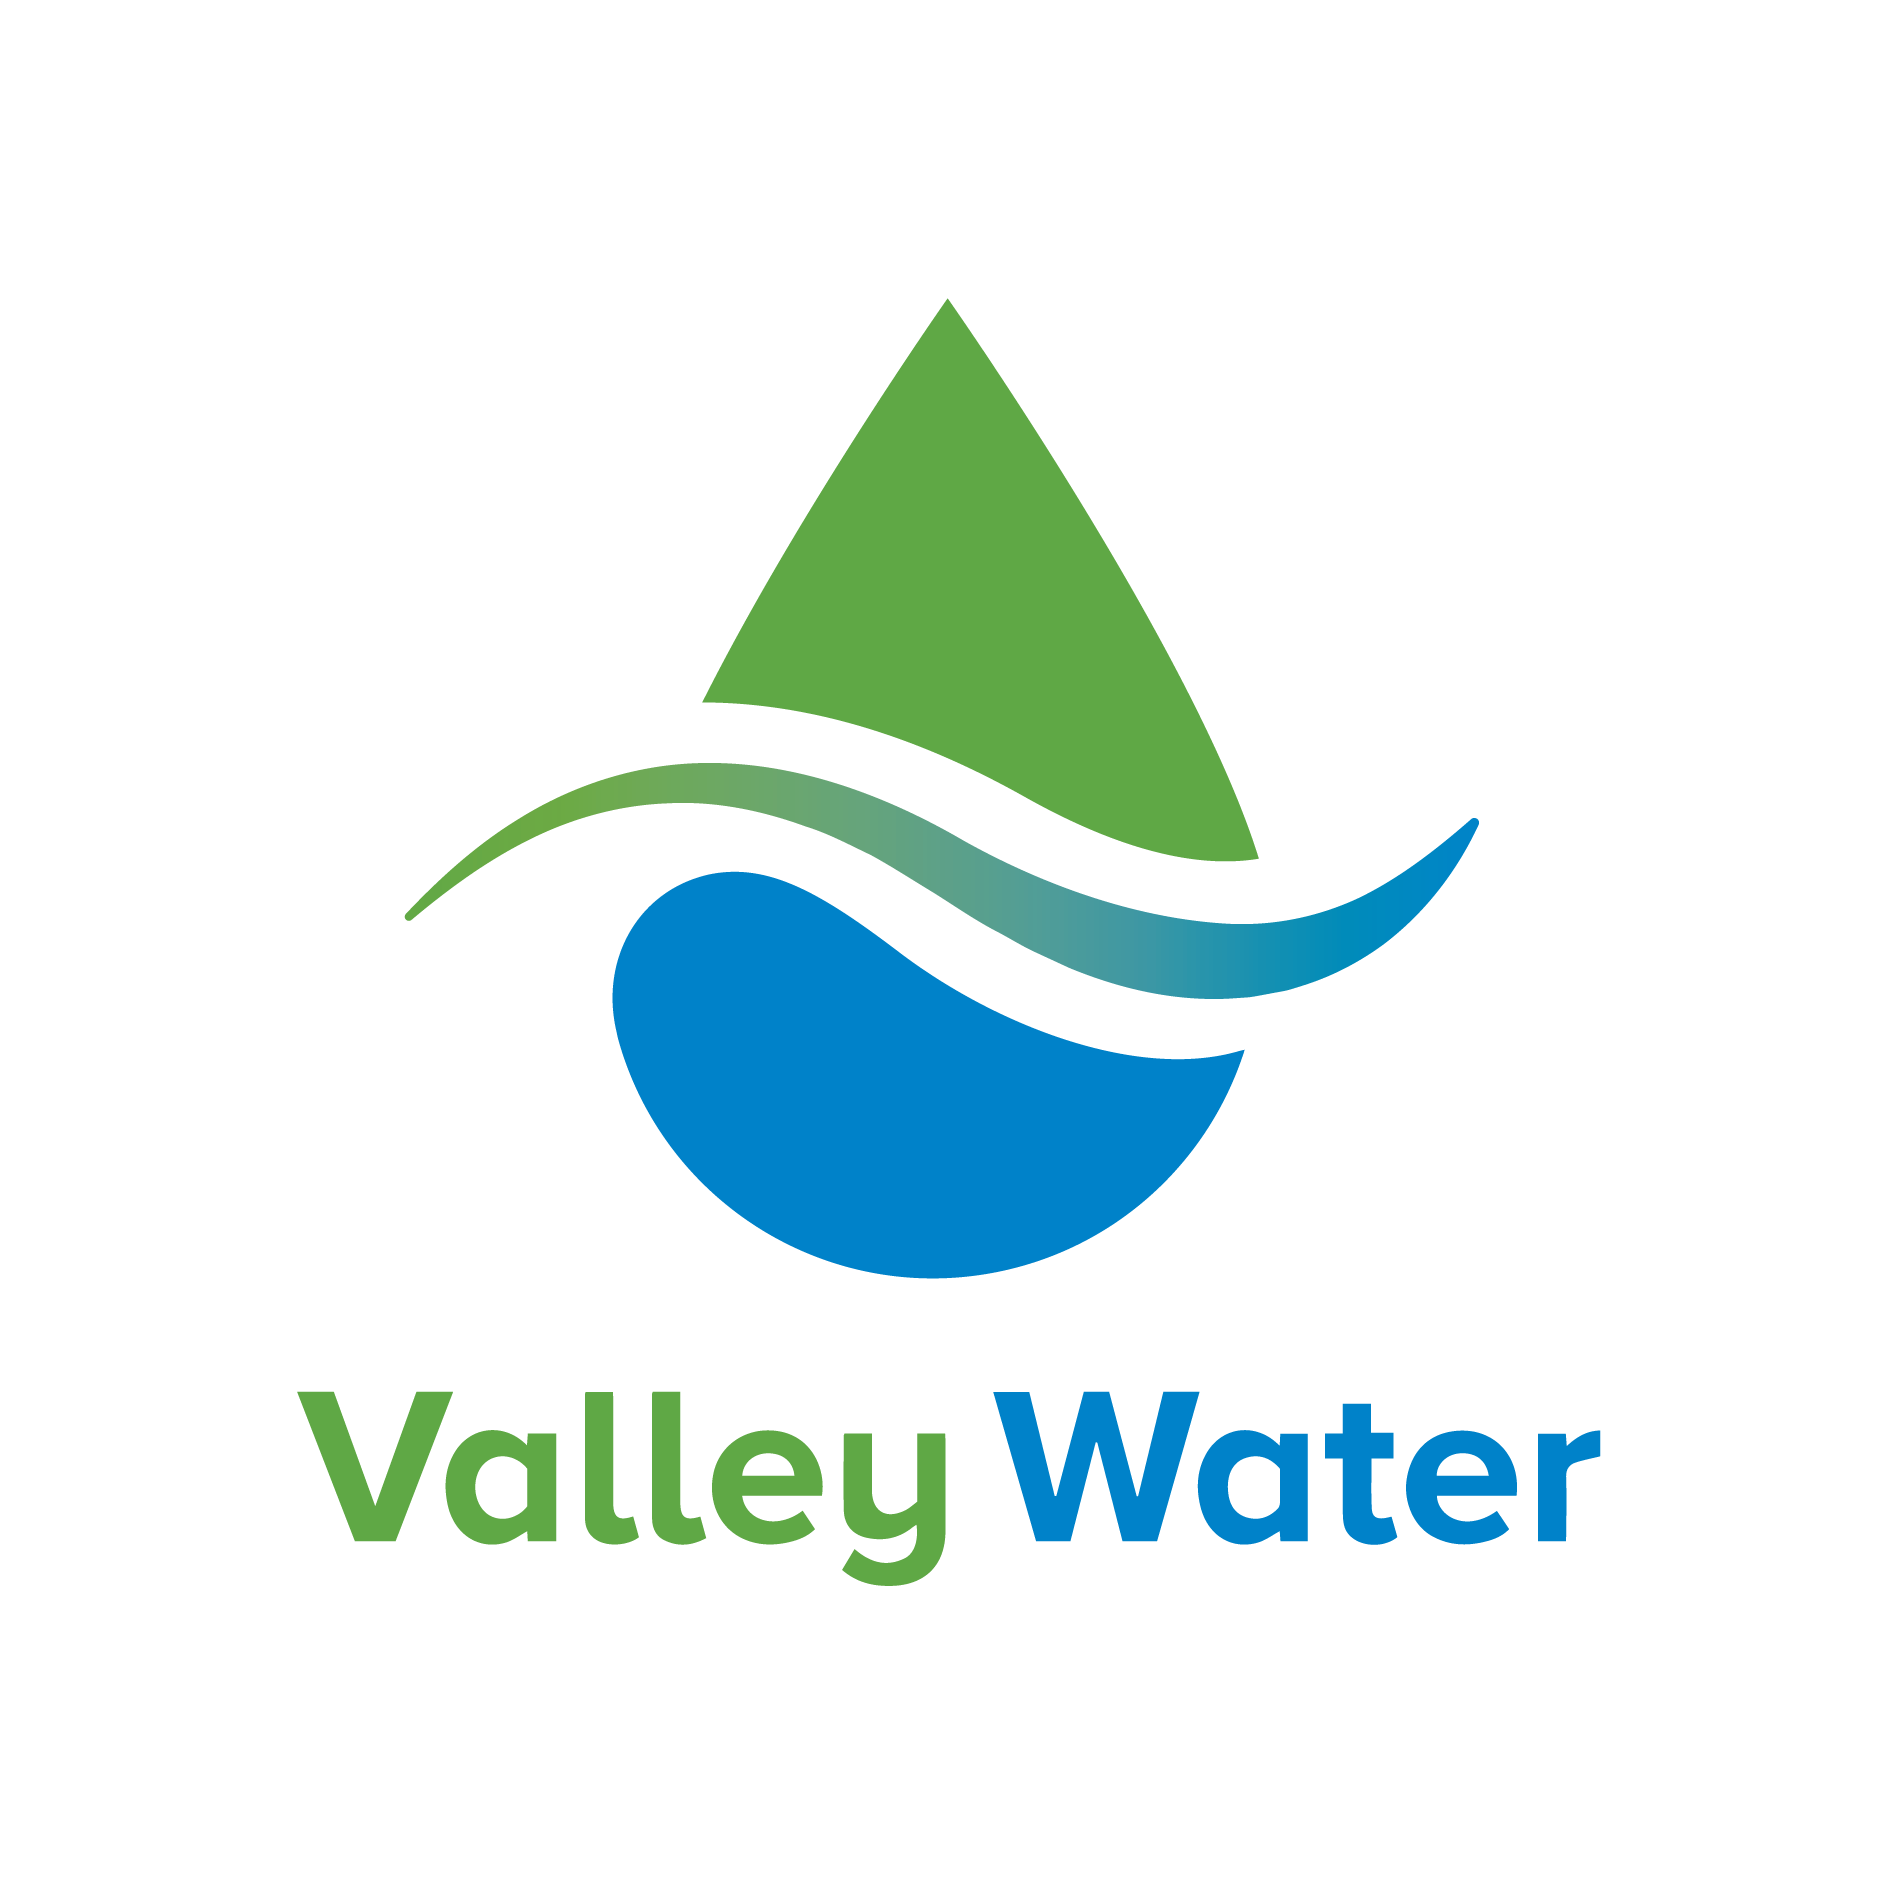 Valley Water color logo